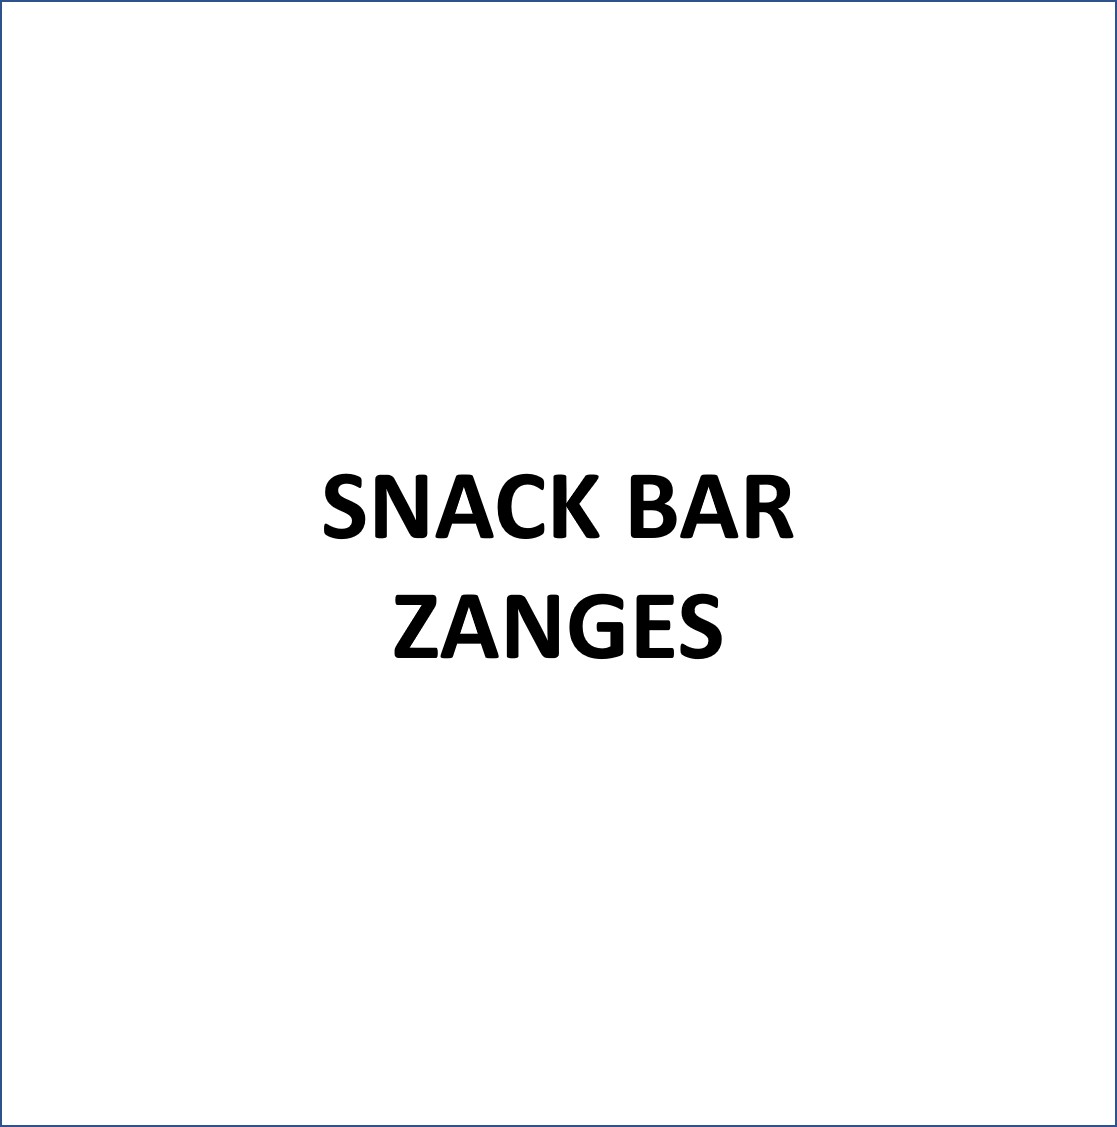 Snack Bar Zanges